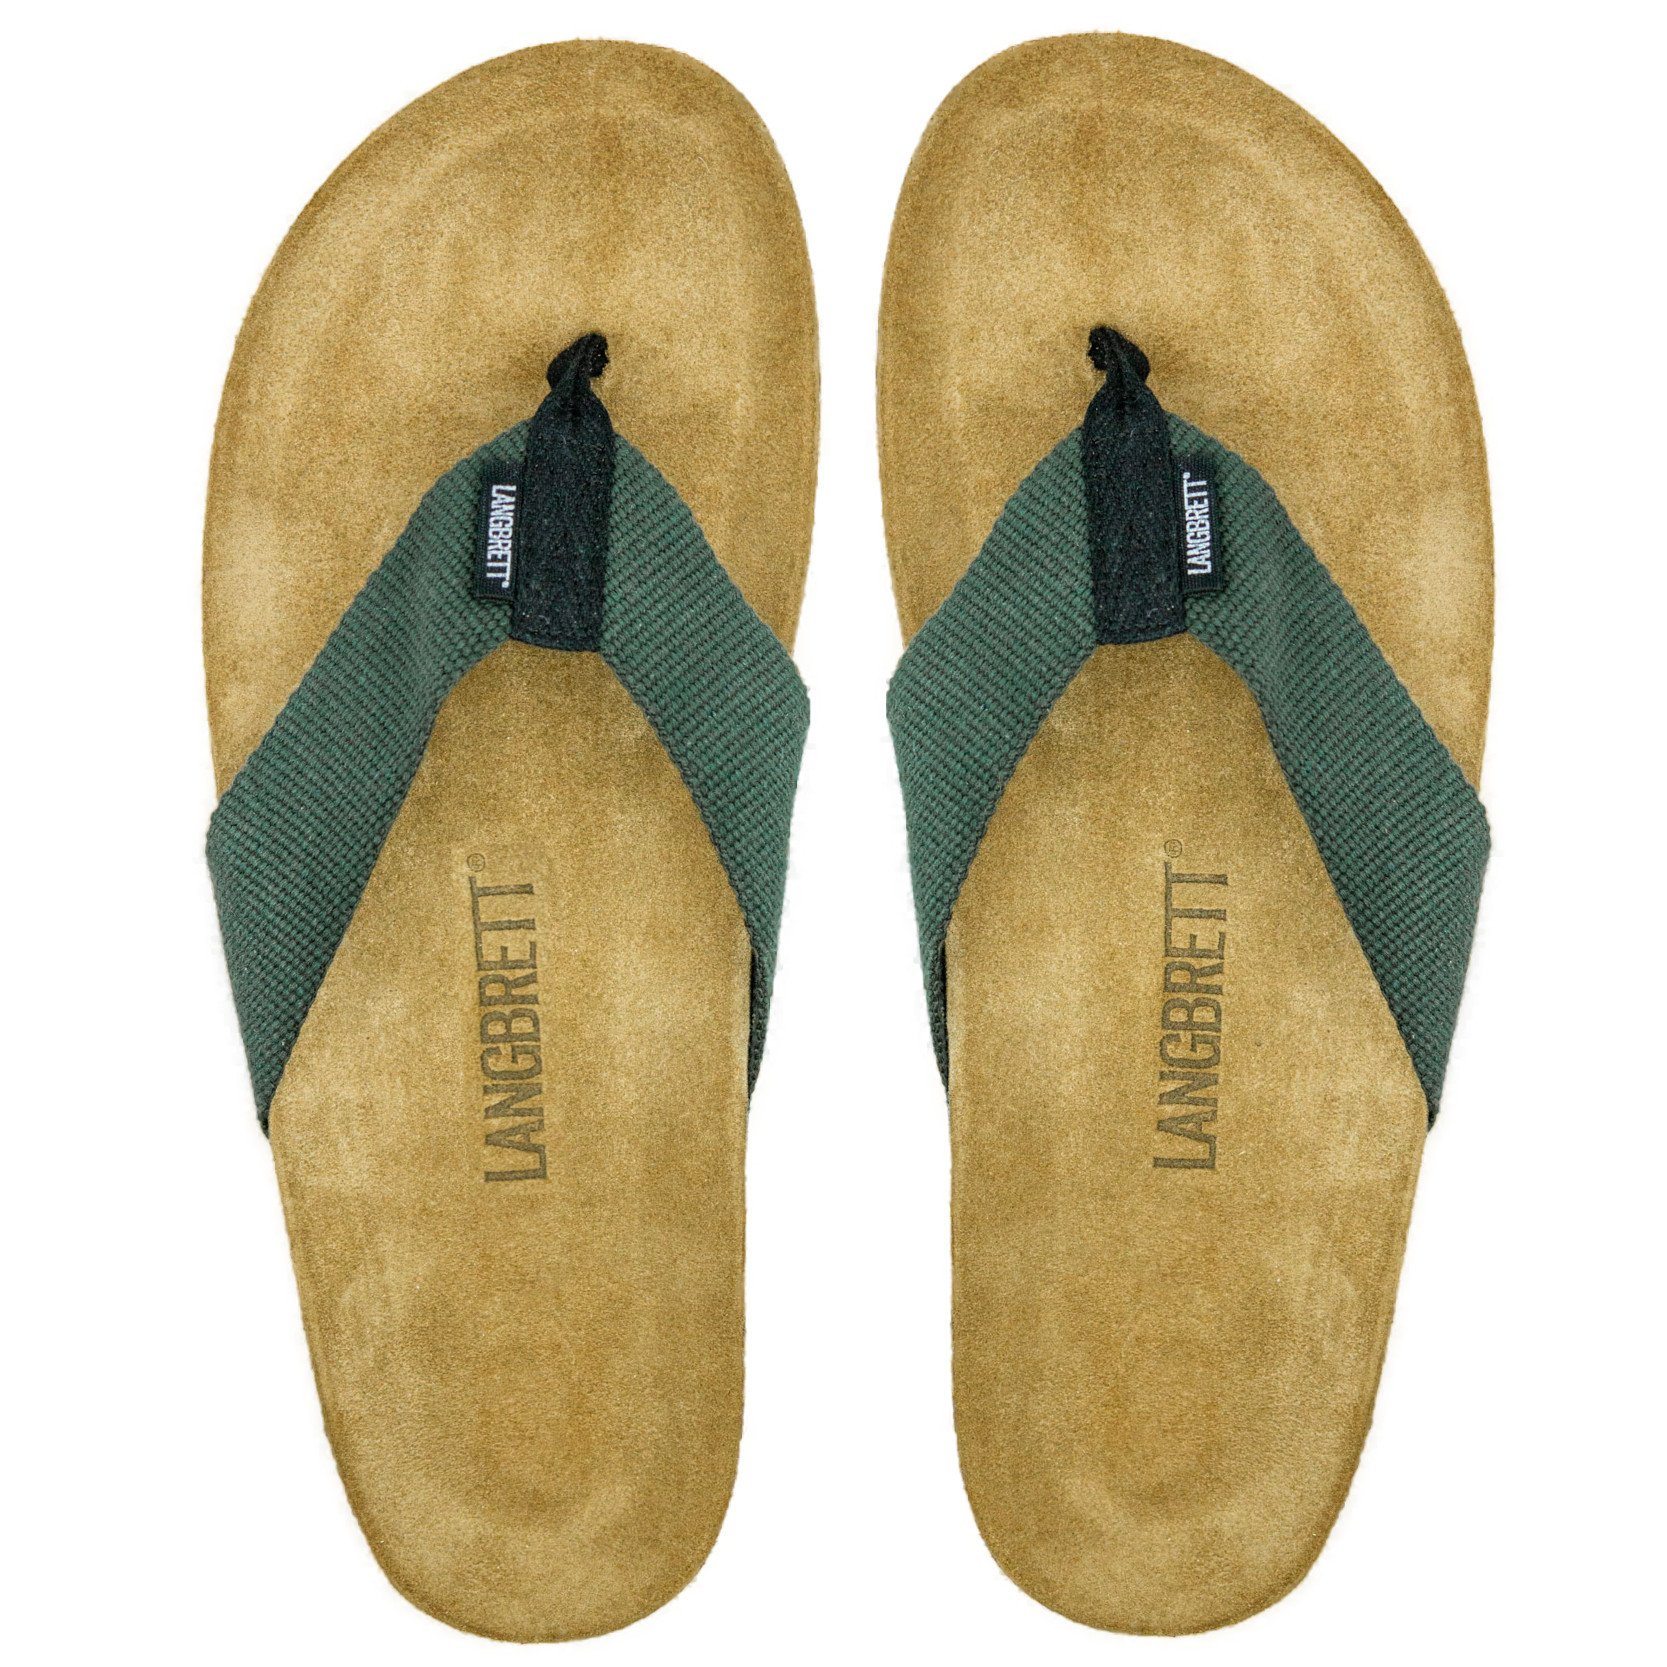 LANGBRETT GUR Ecological sandals, Green / 45